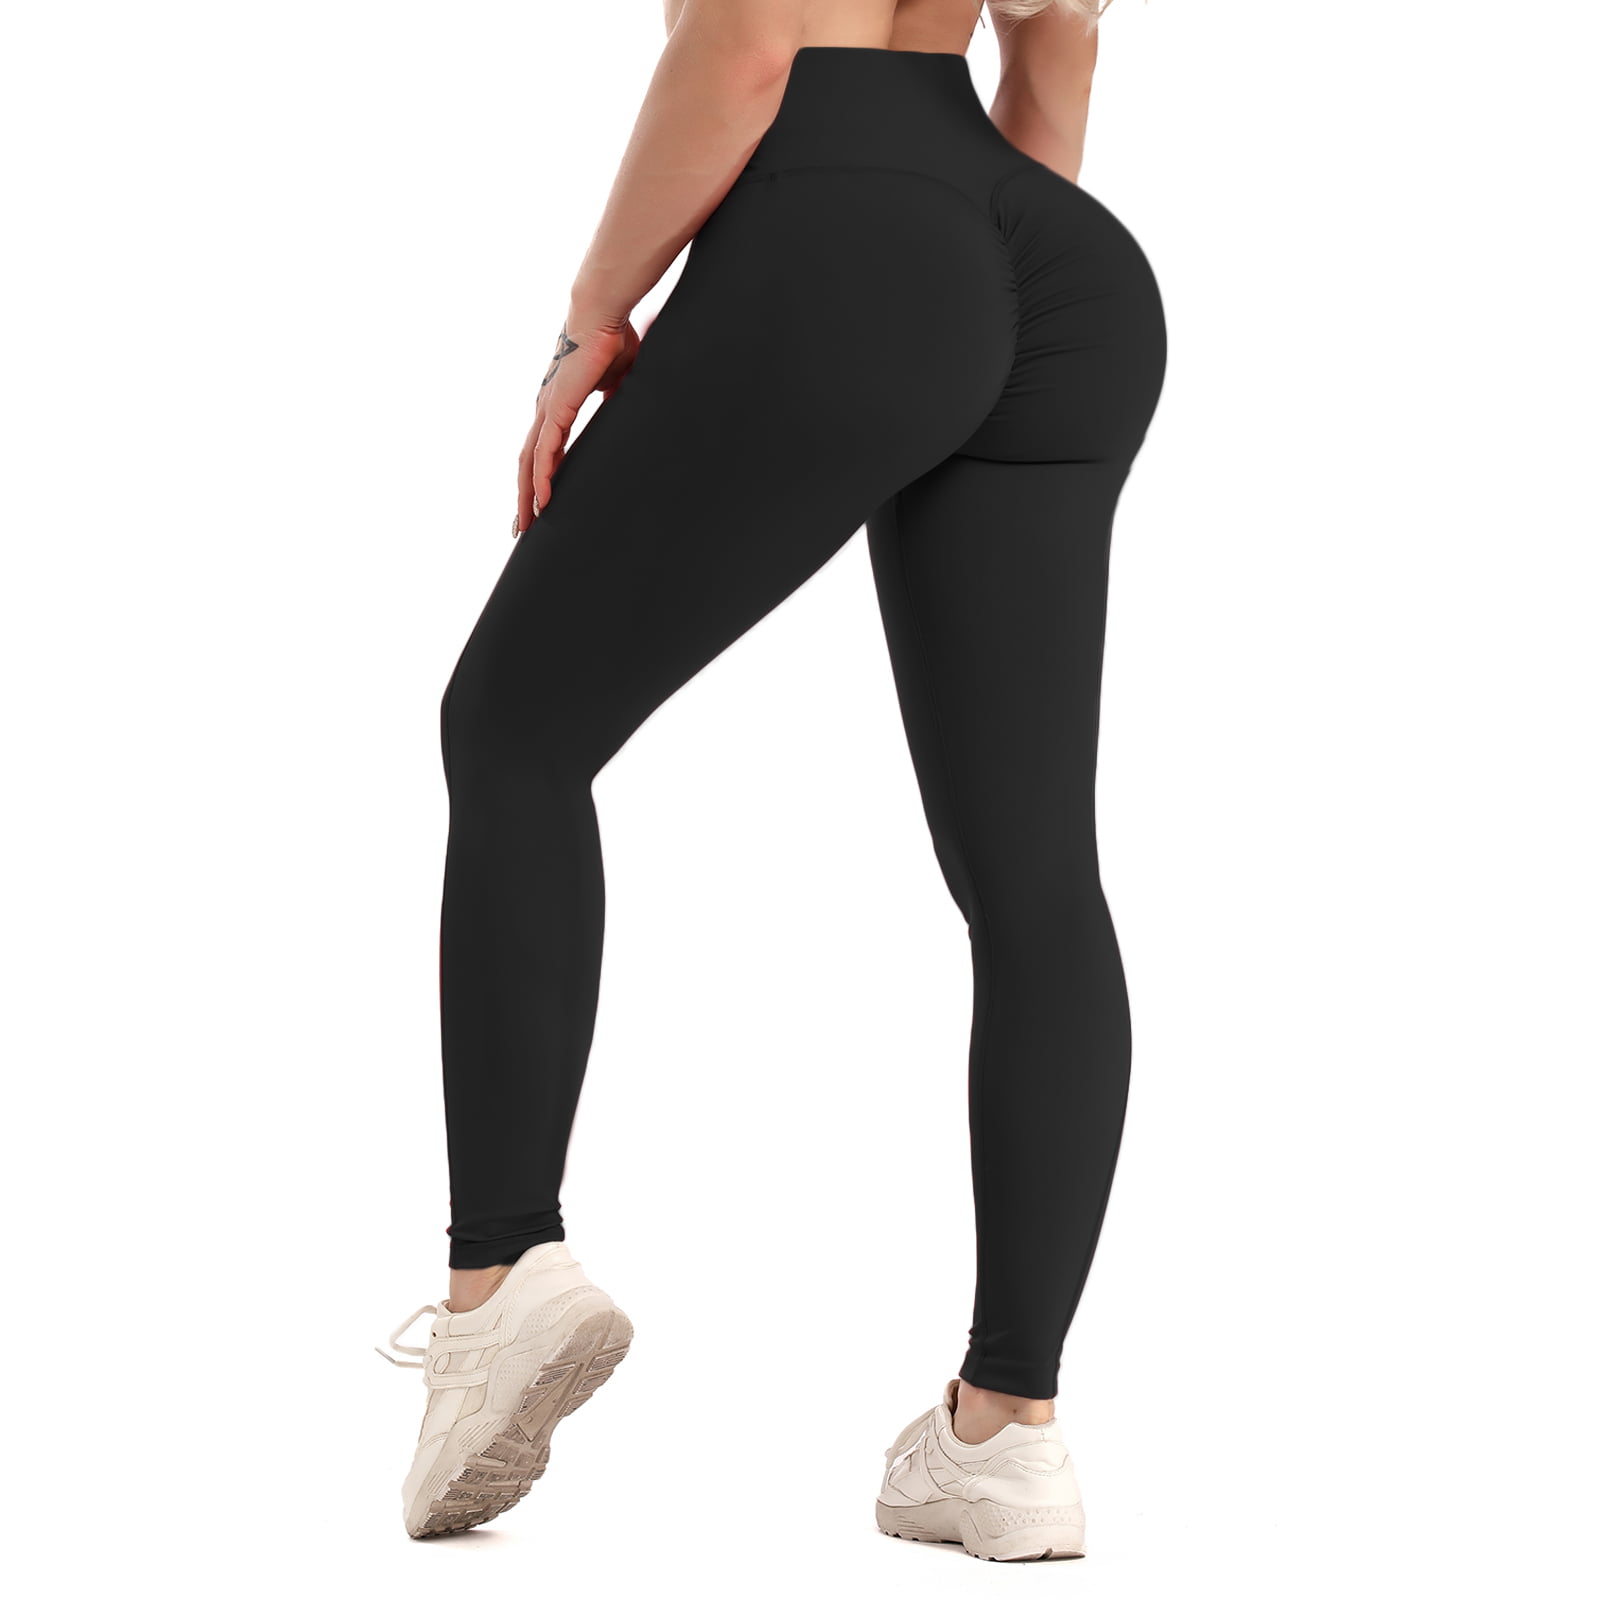 Capri Yoga Pants With Pockets$22see